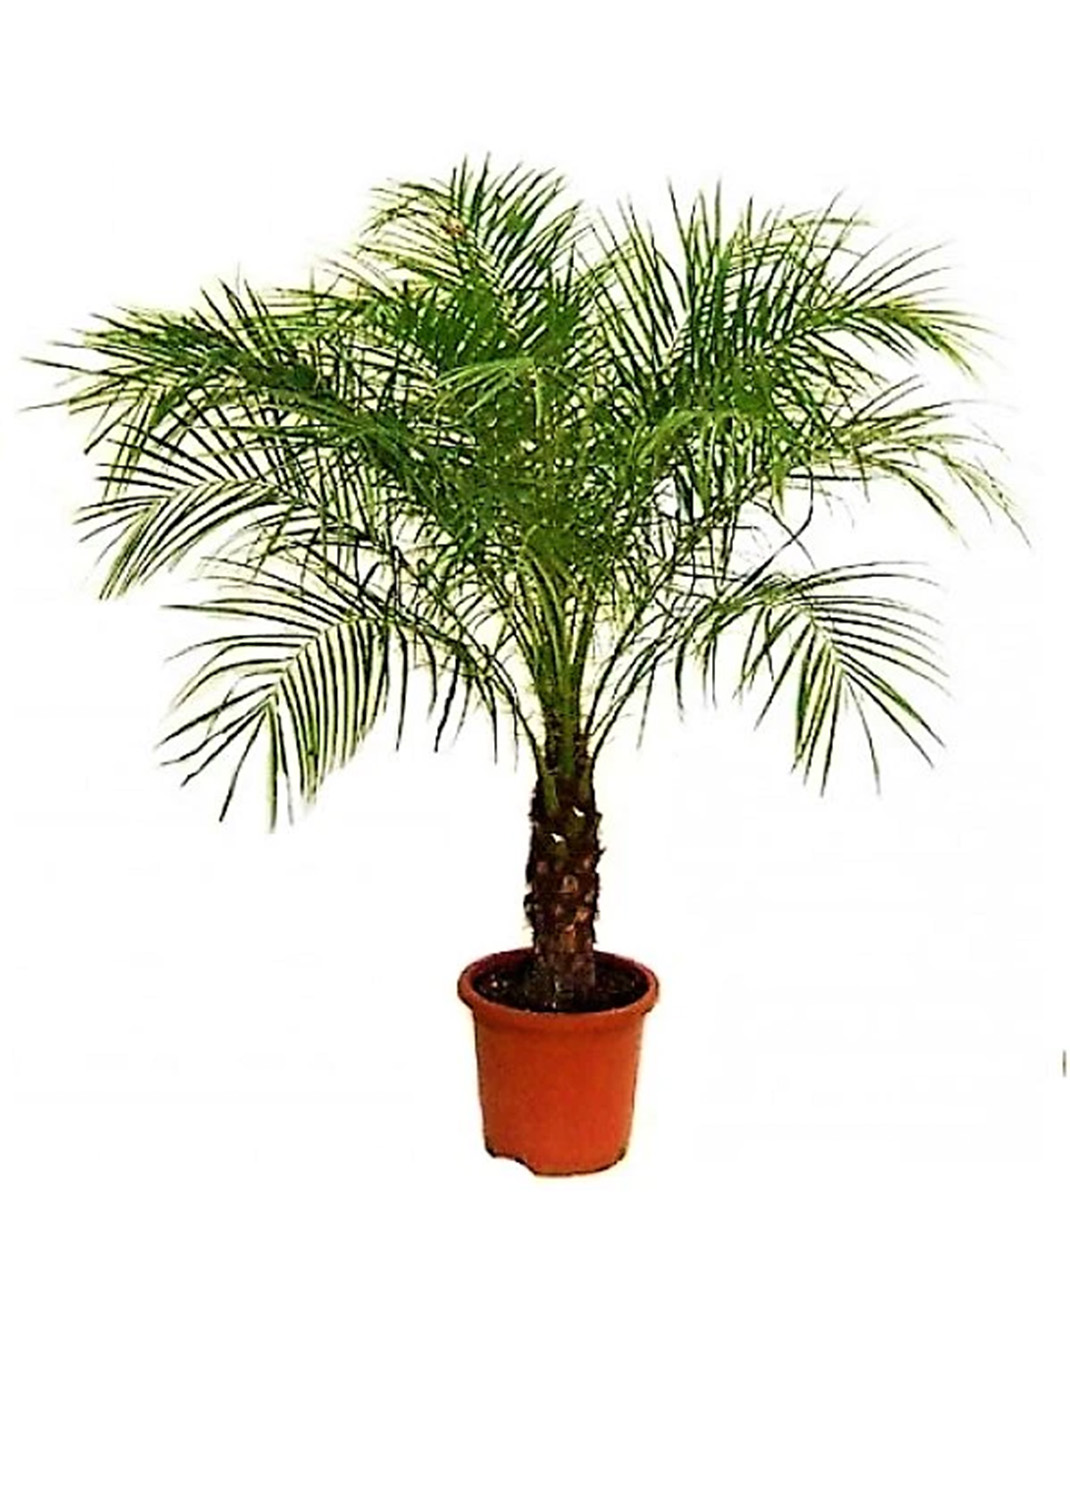 Phoenix Roebelenii, Miniature Date Palm, Dwarf Pygmy Date palm